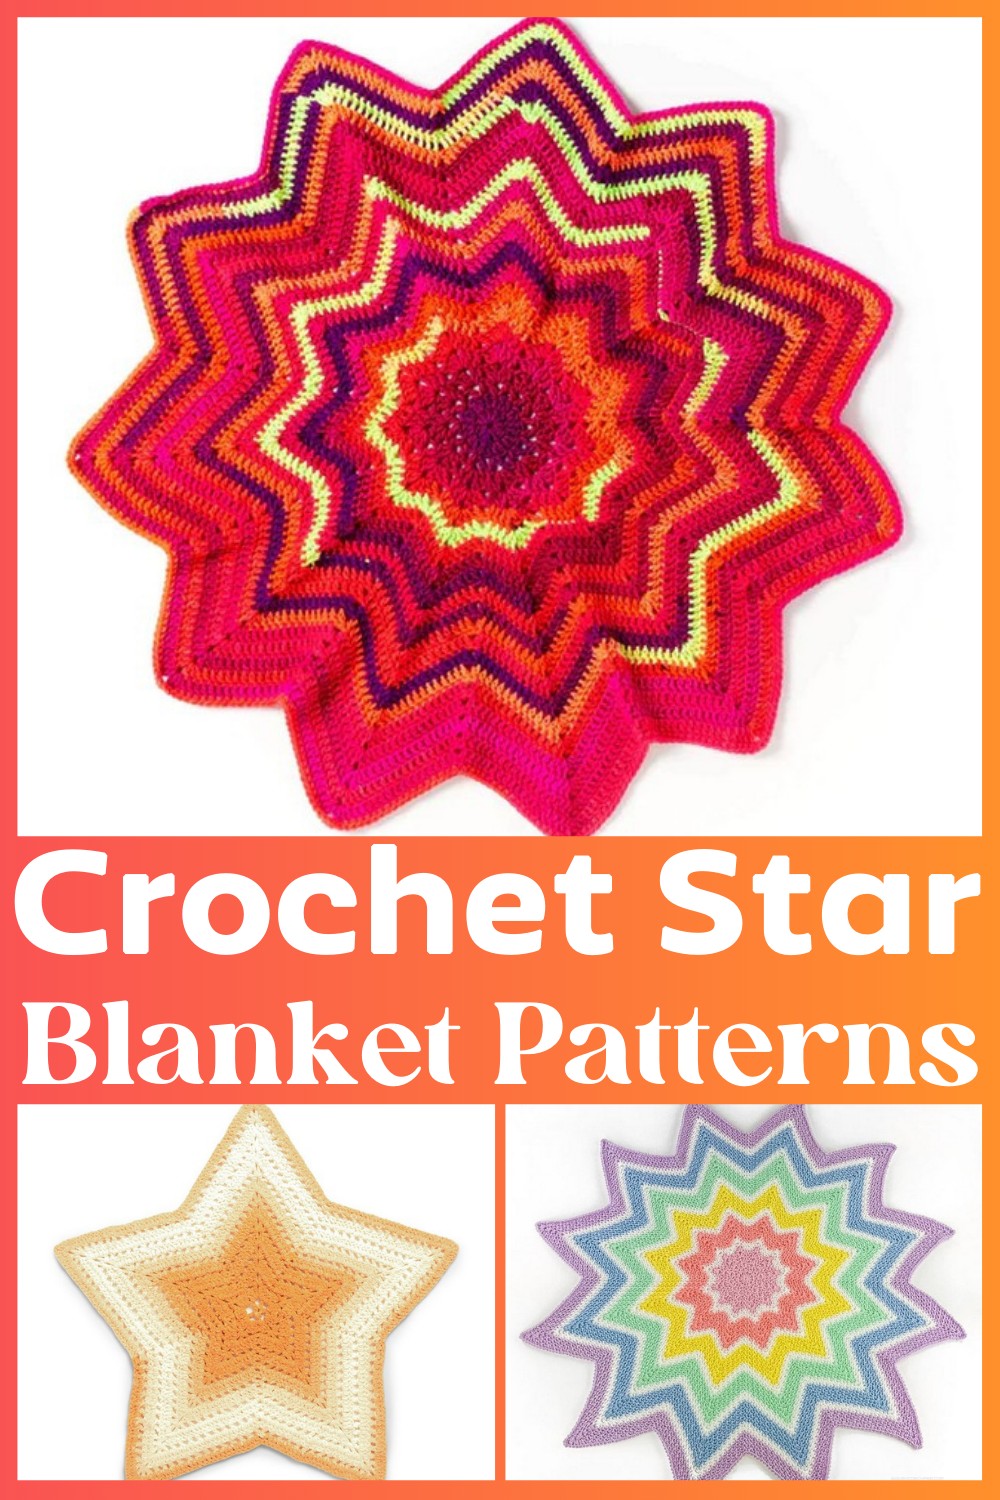 Crochet Star Blanket Patterns Free